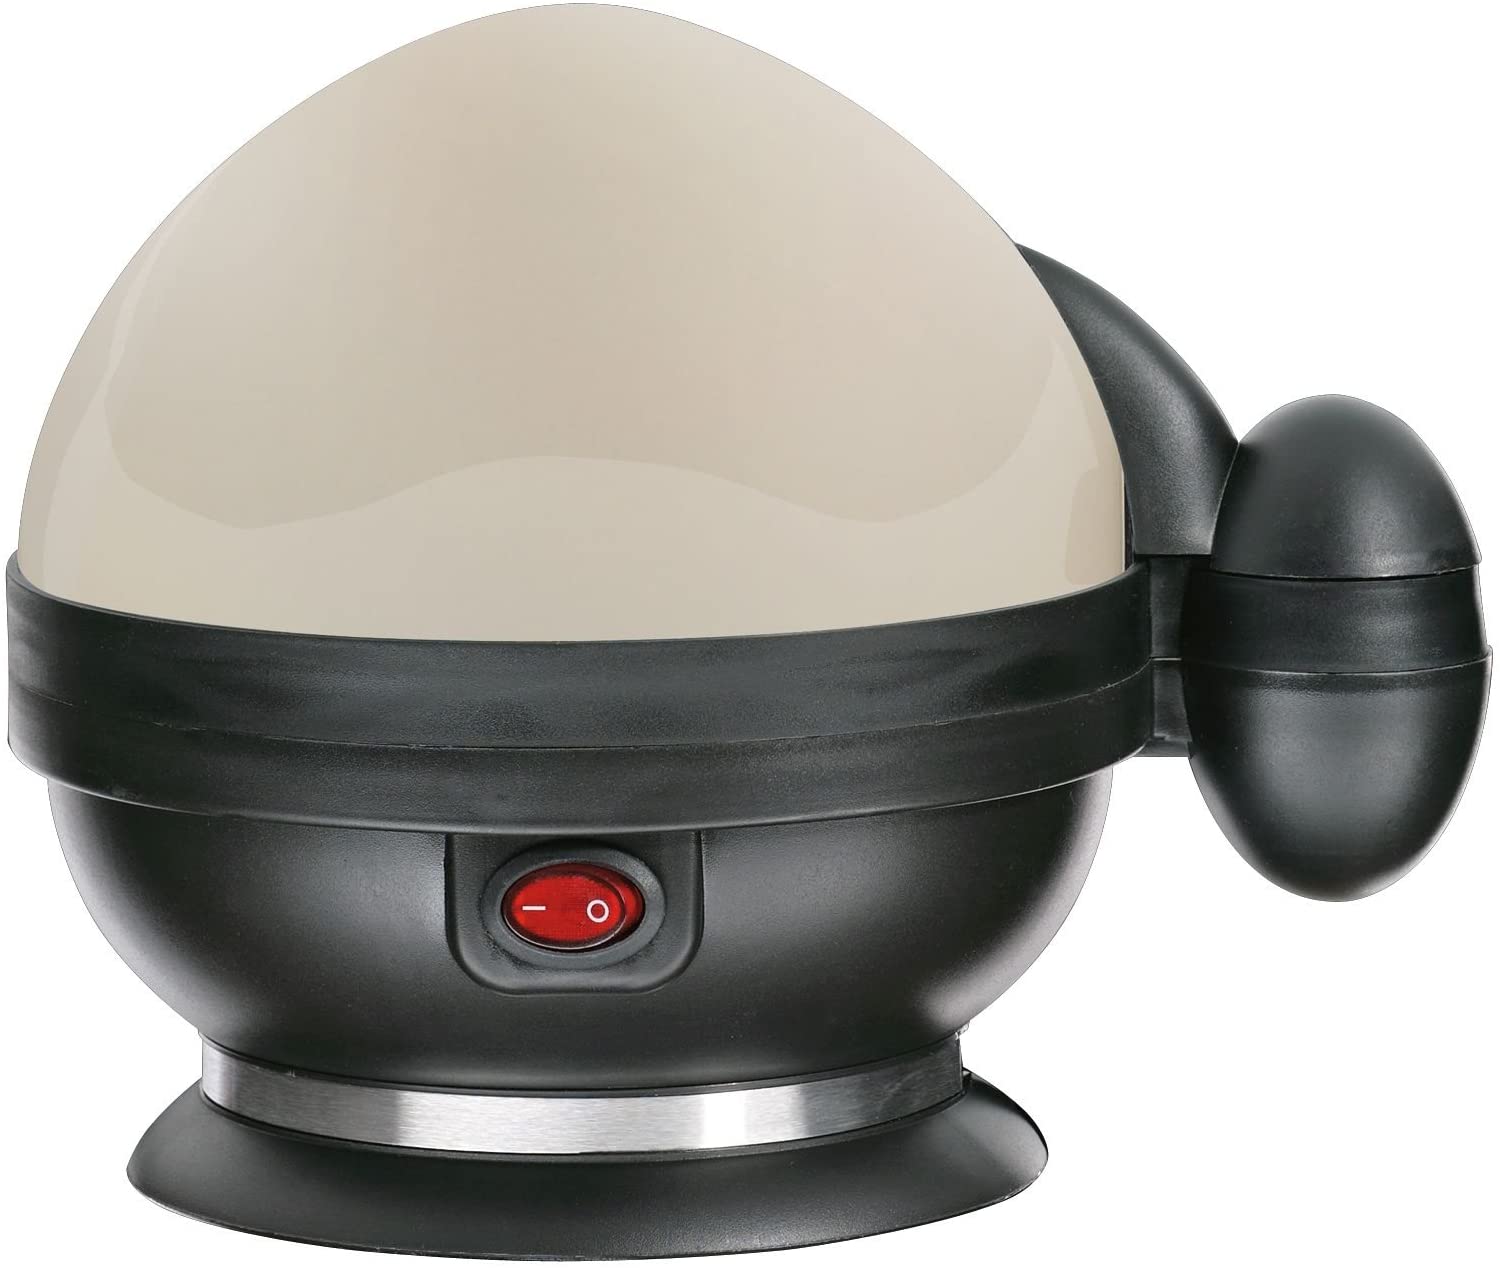 Cilio Retro 0000492422 Egg Boiler, Stainless Steel/Beige